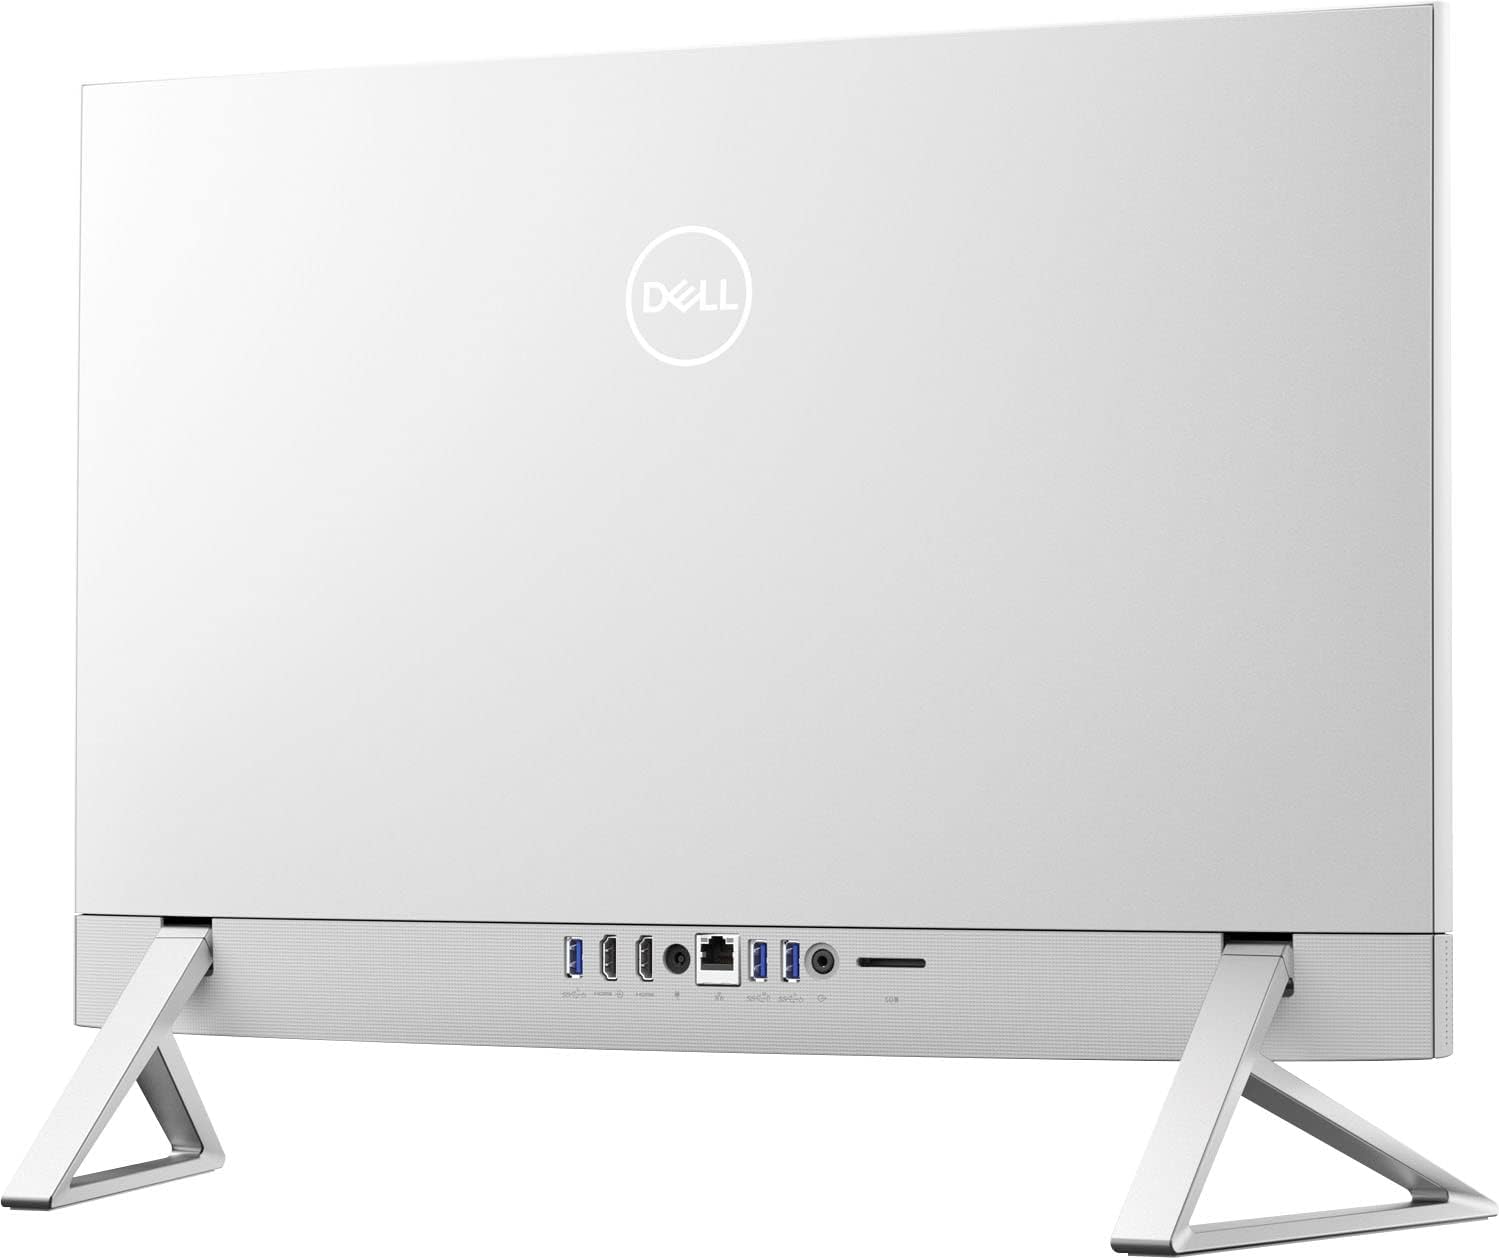 2022 Dell Inspiron 5410 Desktop Review